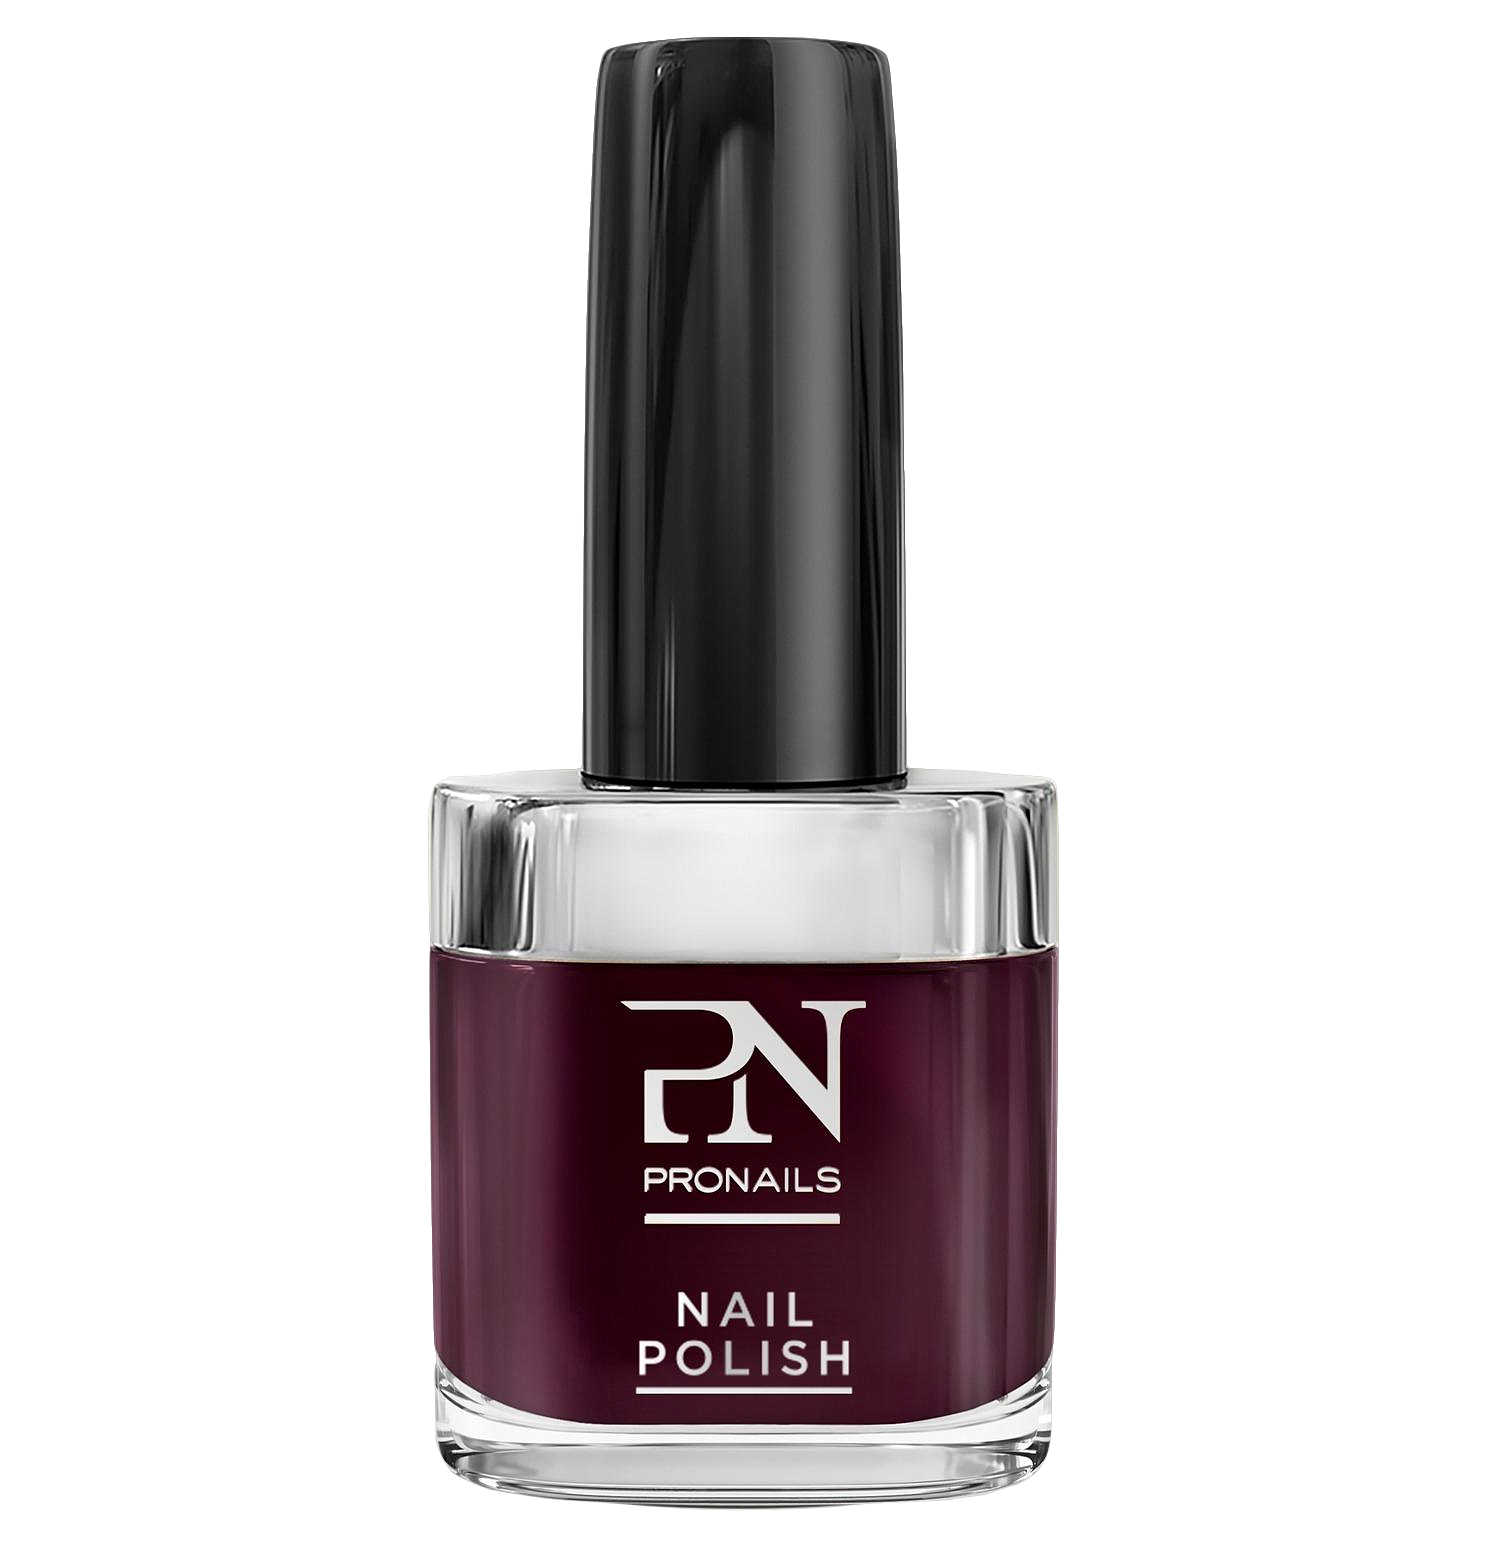 PN SELFCARE Purple nail polish 10ml - Vegan Cruelty Free